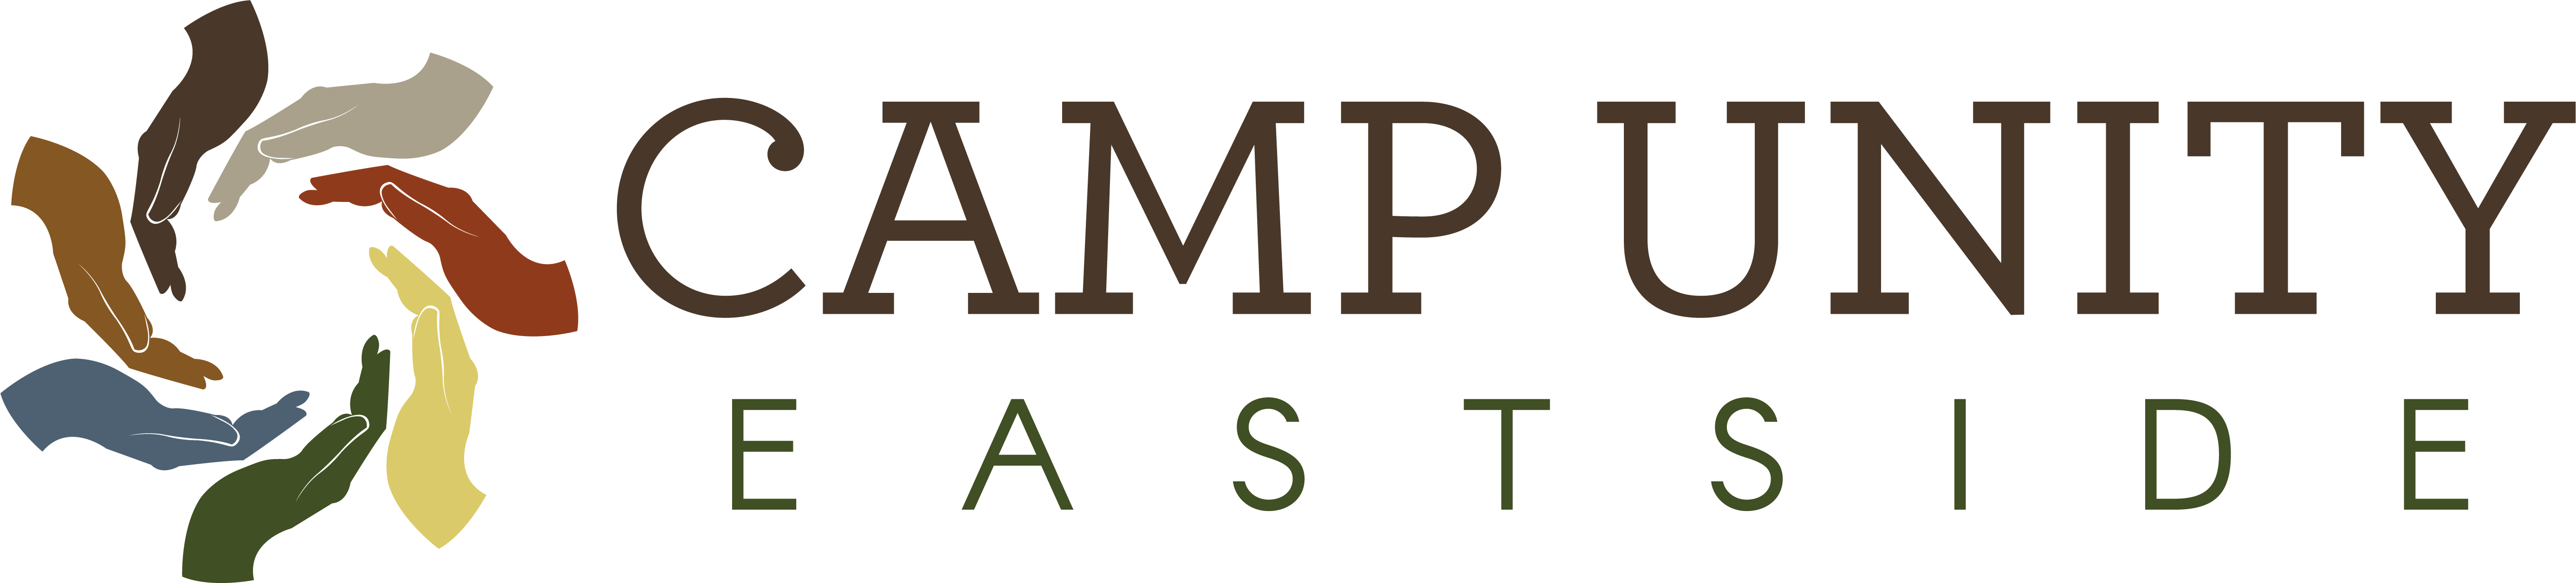 Camp Unity Eastside logo